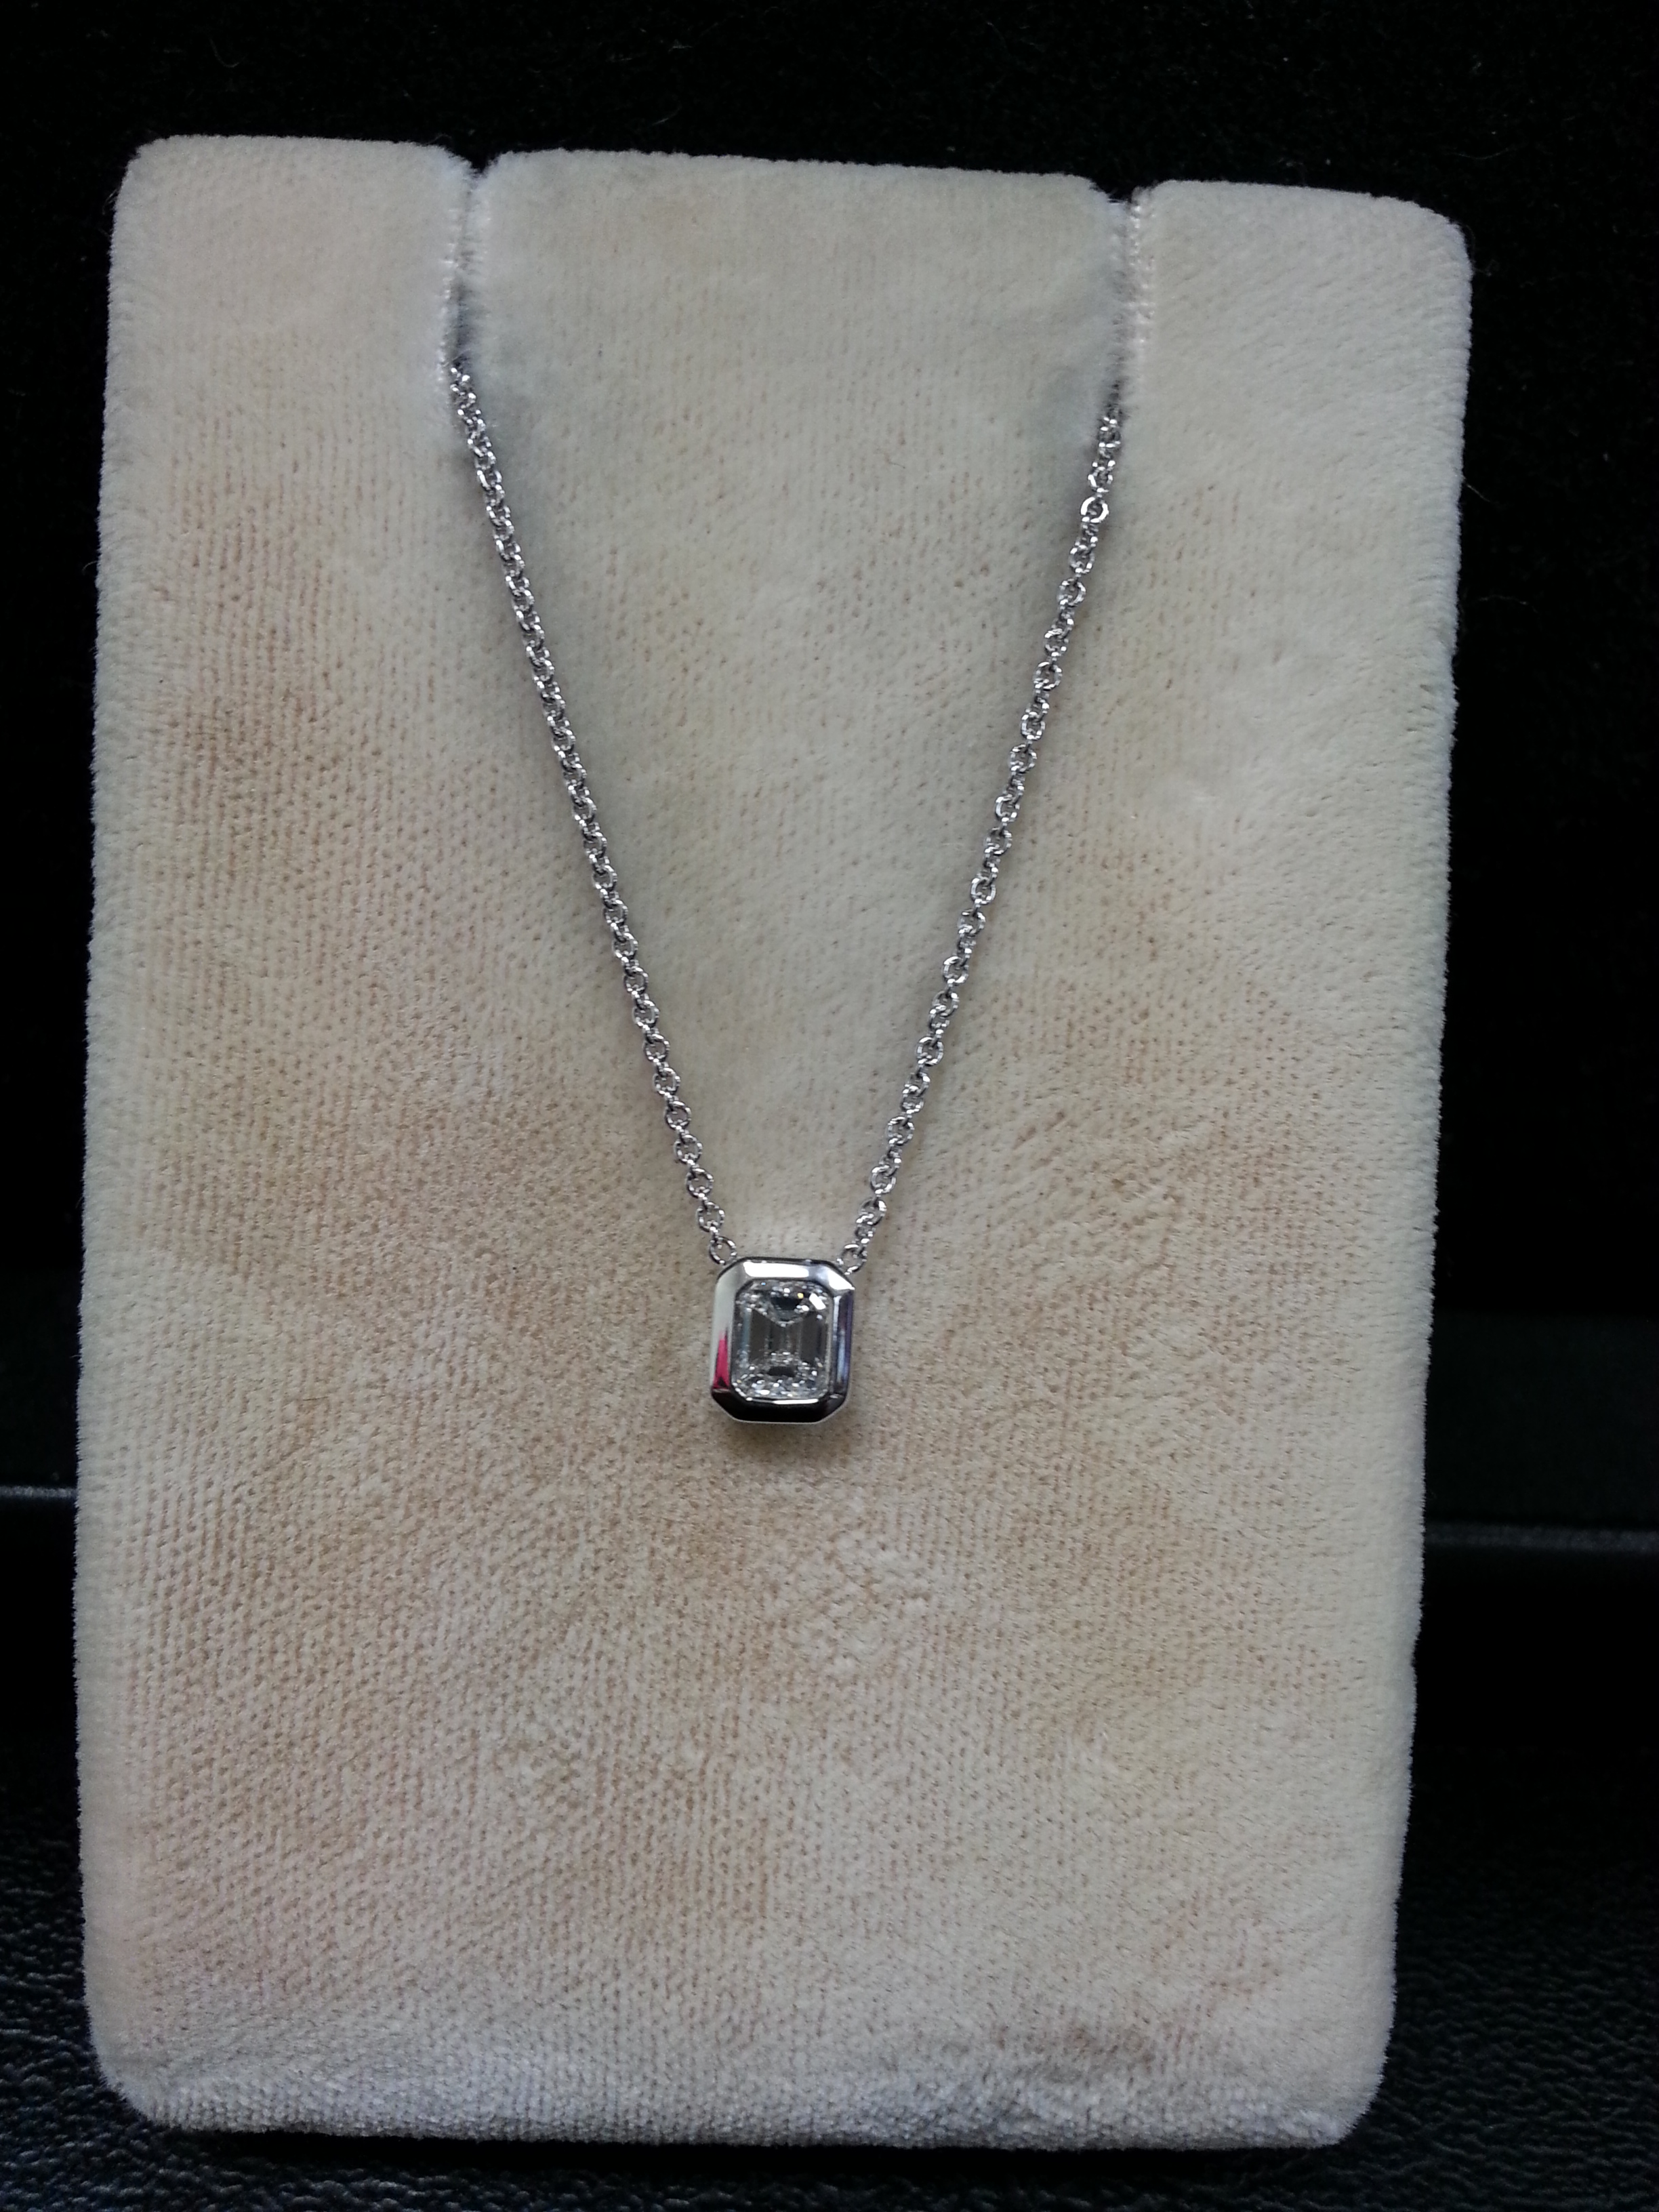 18k White Gold Bezel Set Emerald Cut Diamond Pendant on 18k White Gold Adjustable 16"-18" Chain. E/SI1 D.31ct